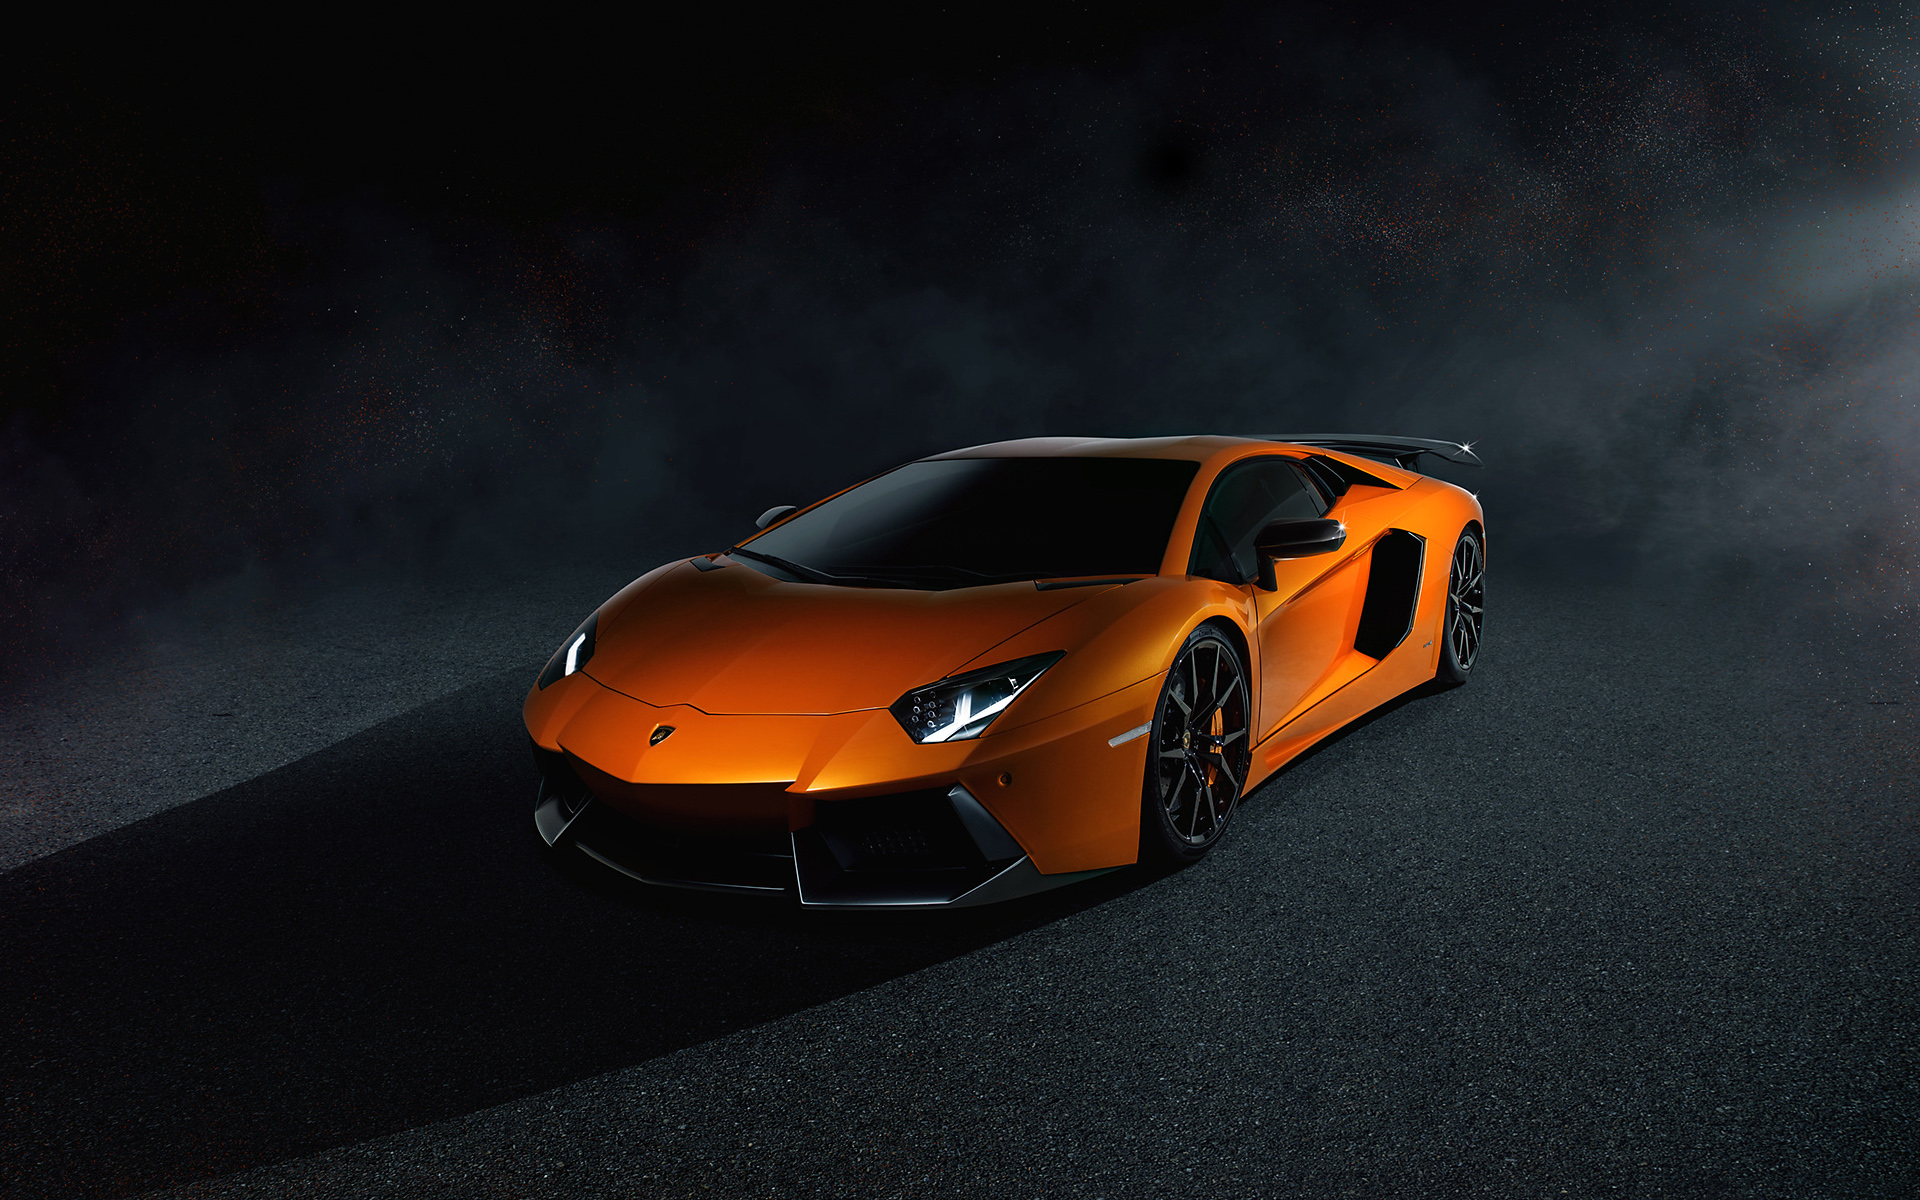 Laden Sie das Lamborghini, Autos, Lamborghini Aventador, Lamborghini Aventador Lp700 4, Fahrzeuge, Orangefarbenes Auto-Bild kostenlos auf Ihren PC-Desktop herunter